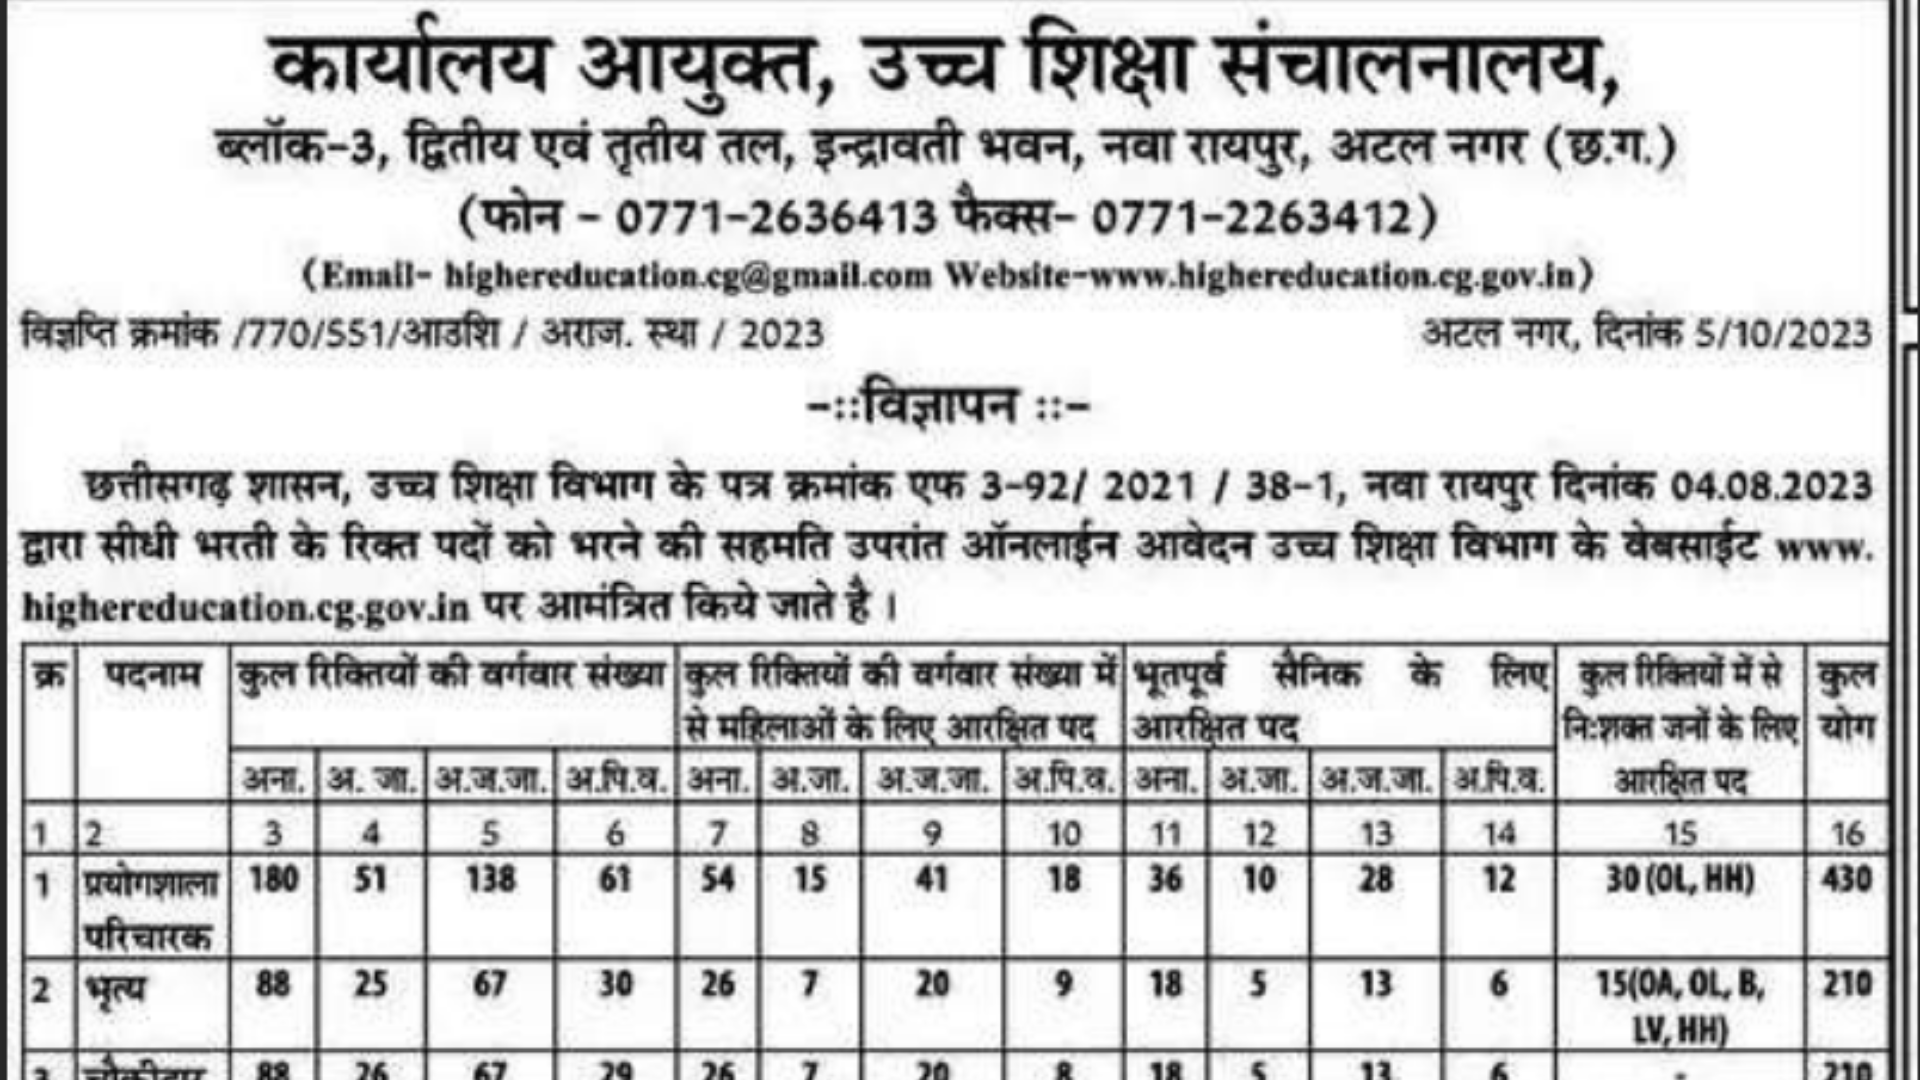 Chhattisgarh Higher Education Recruitment 2023: Apply for 880 Group D Posts